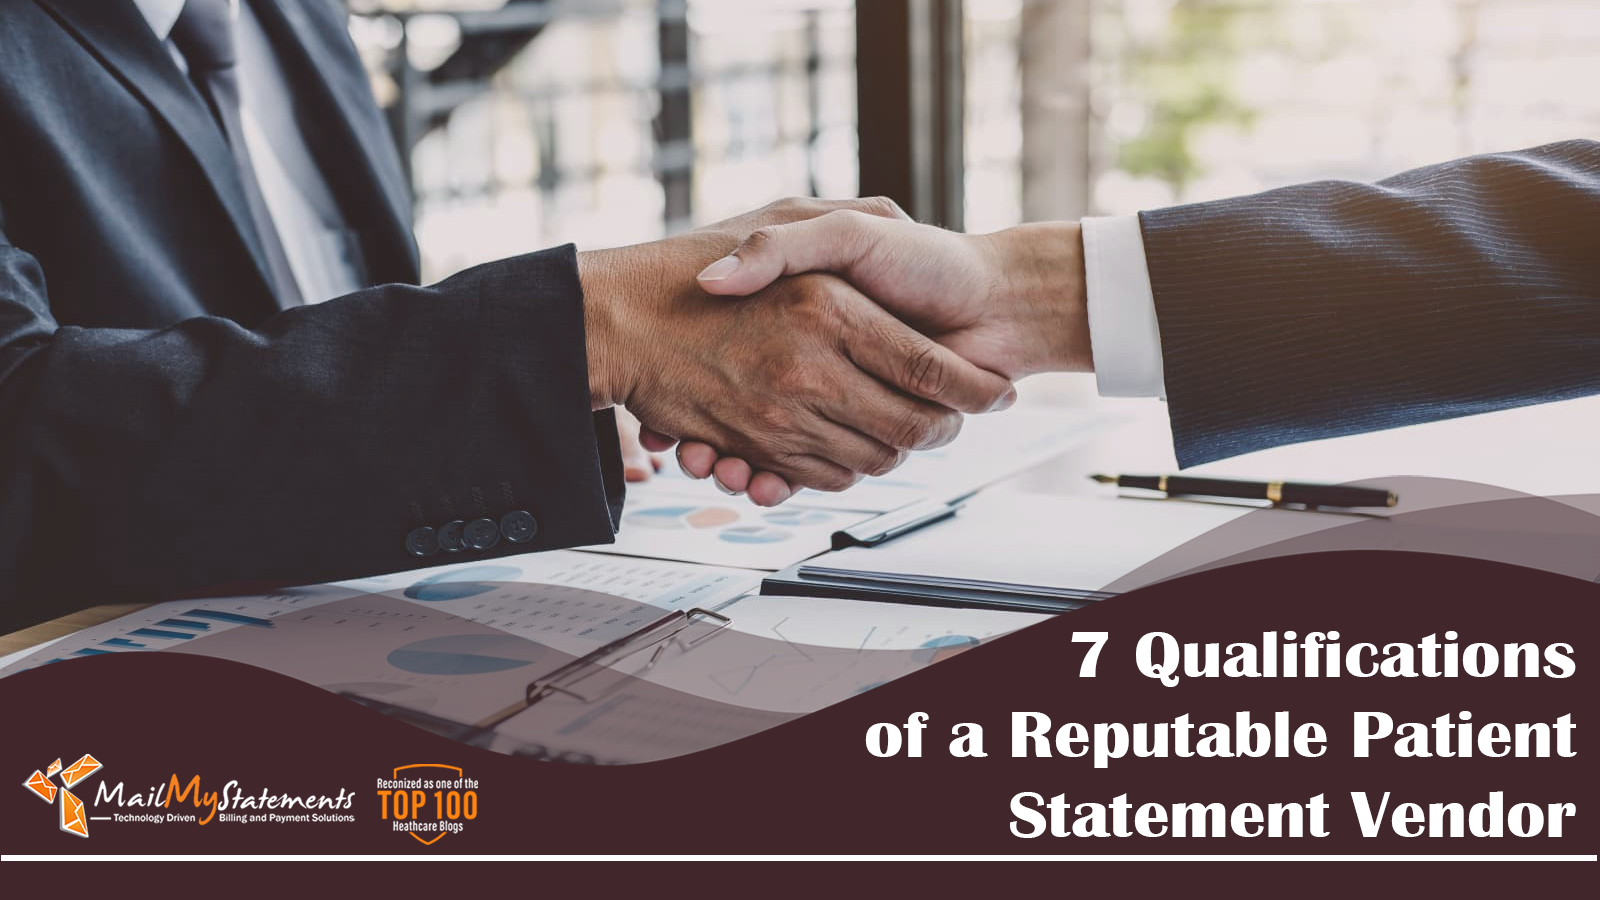 7 Qualifications of a Reputable Patient Statement Vendor